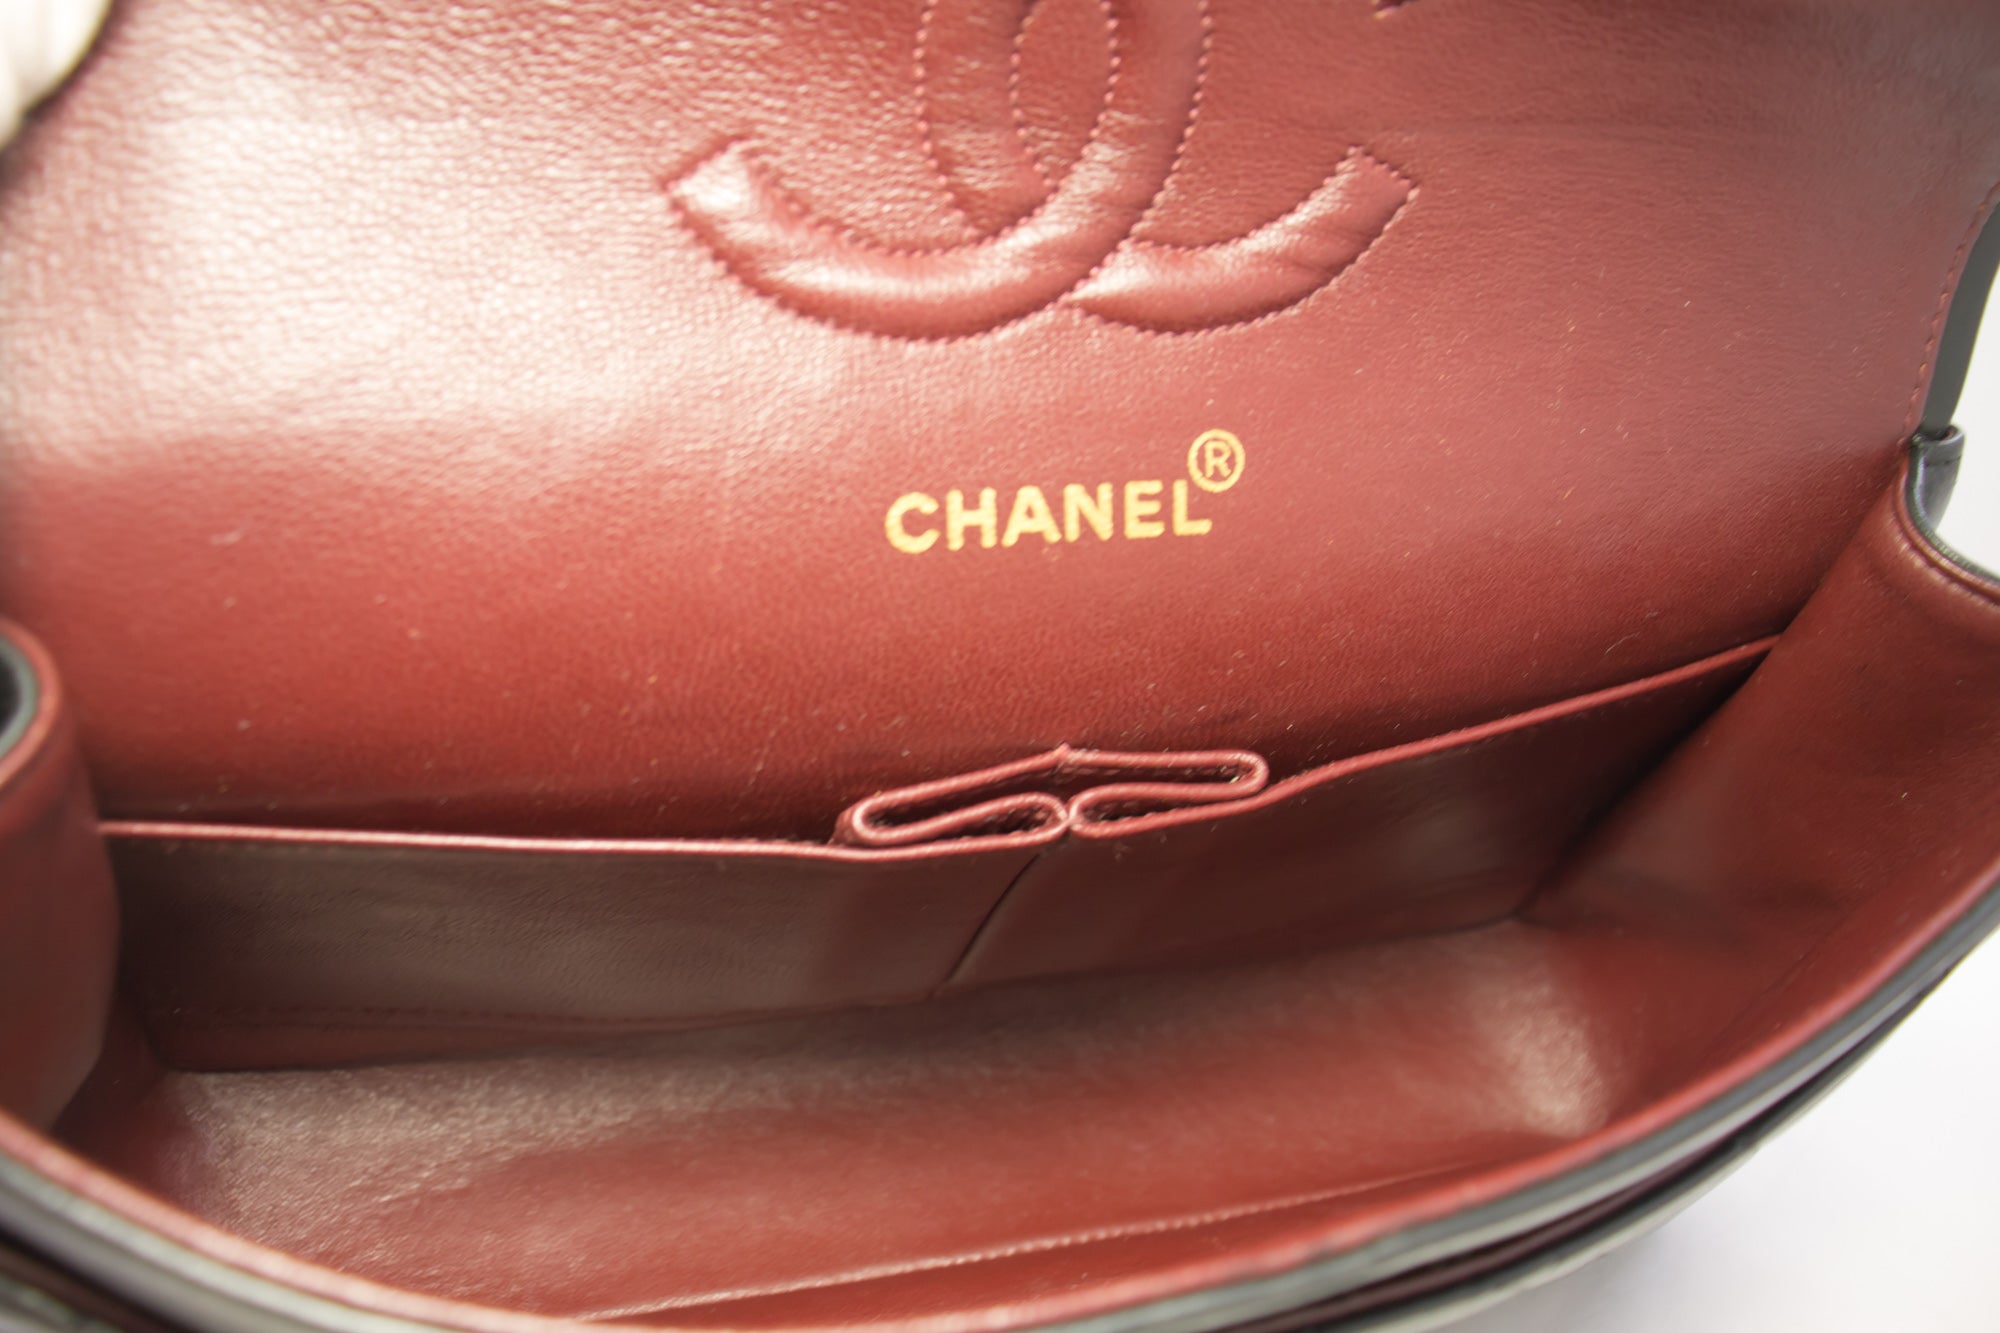 Chanel 2.55 Double Flap Chain Shoulder Bag Black Lambskin Handbag H50